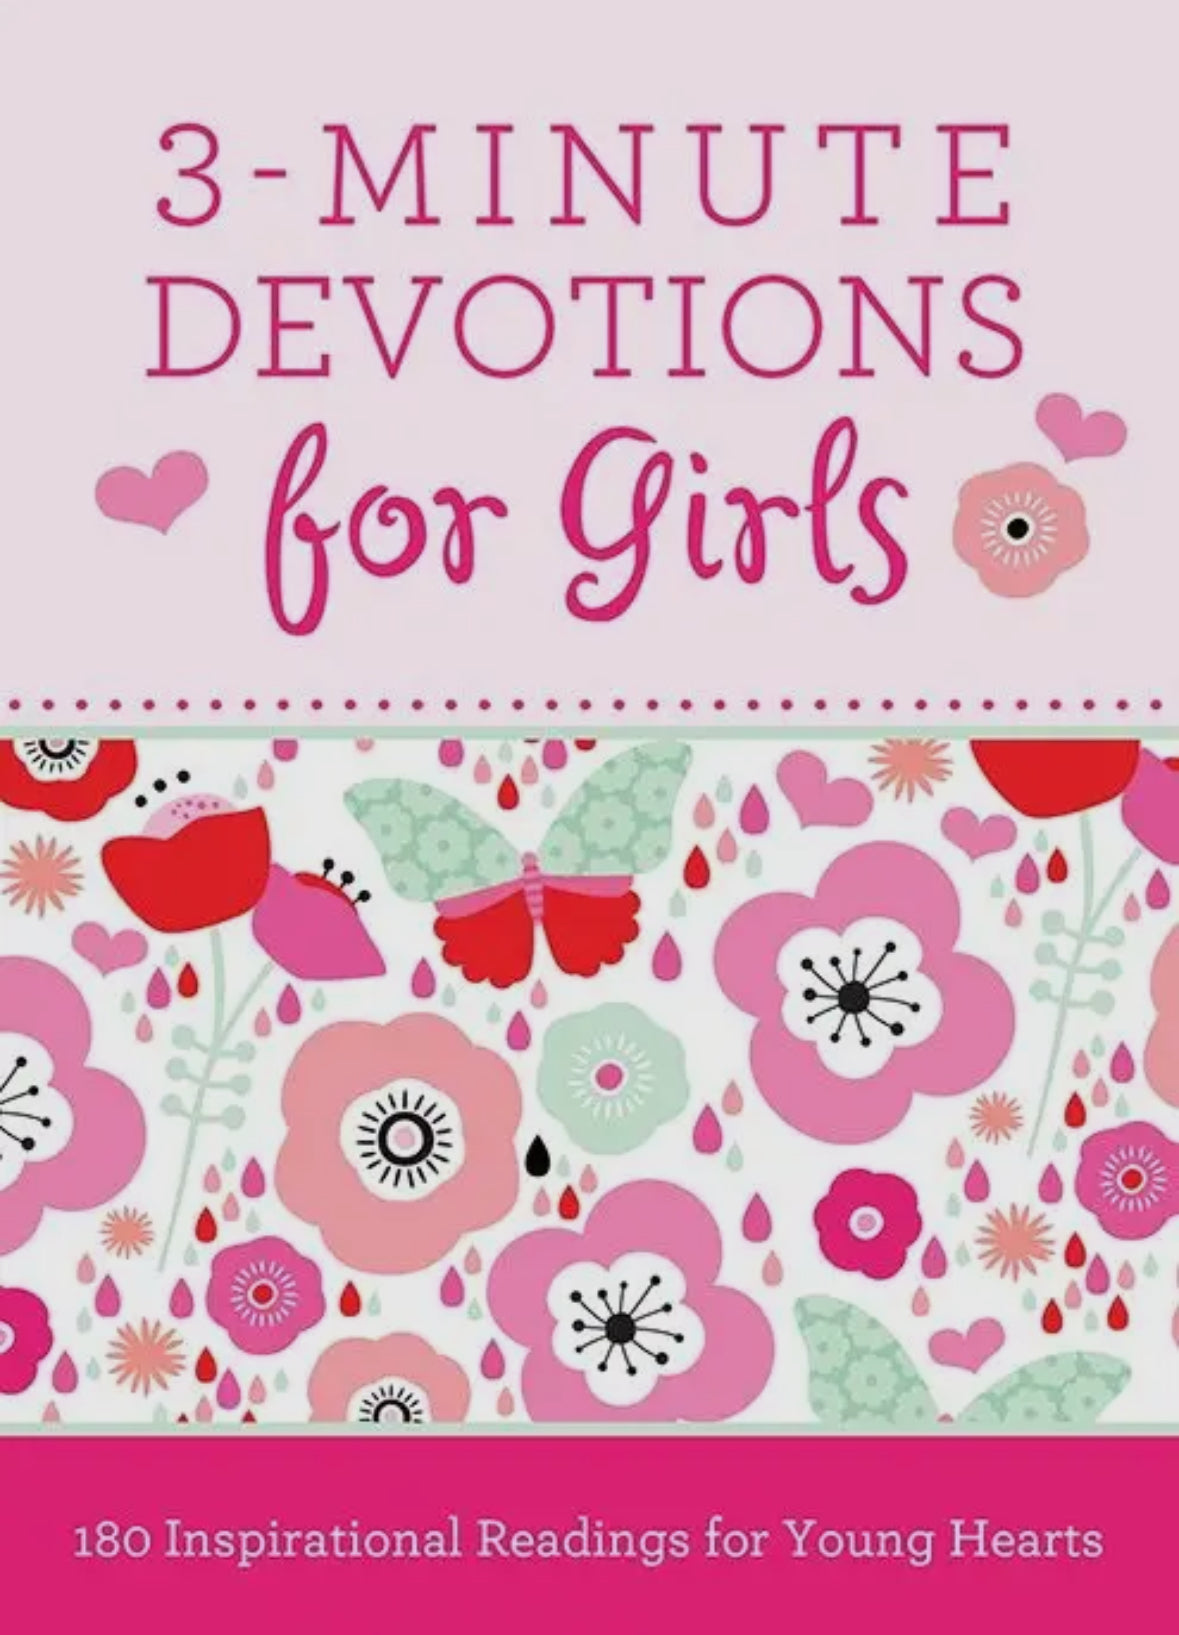 Devotionals & Prayer Journals